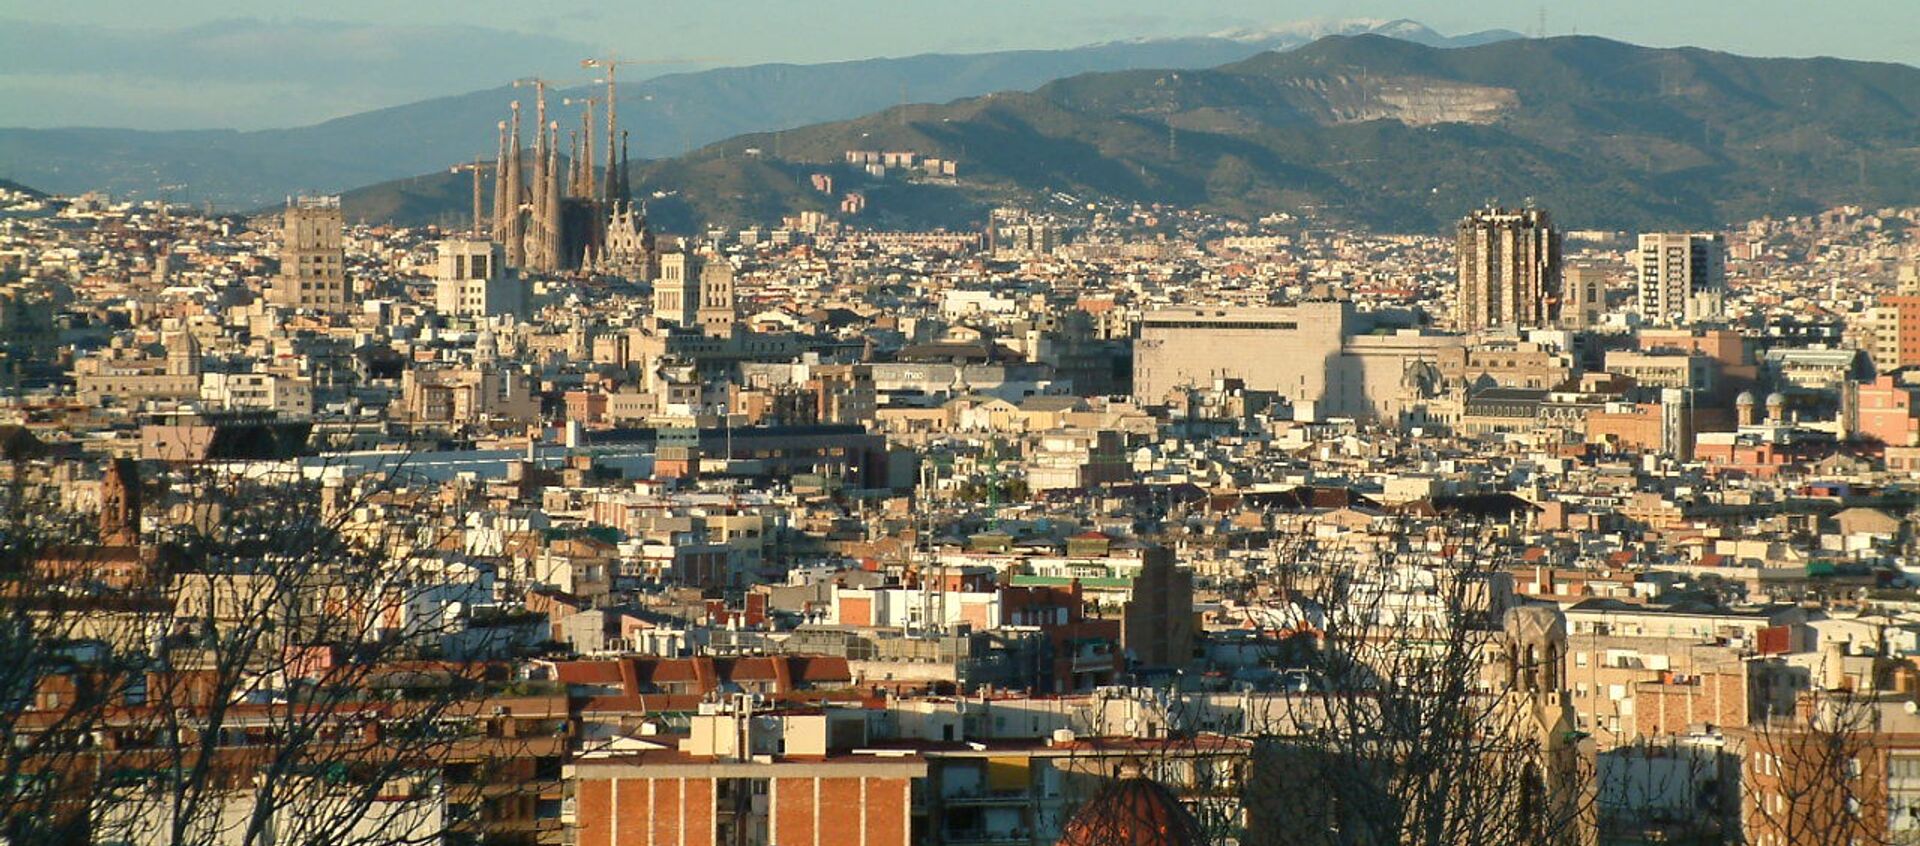 Vista de Barcelona - Sputnik Mundo, 1920, 20.02.2020